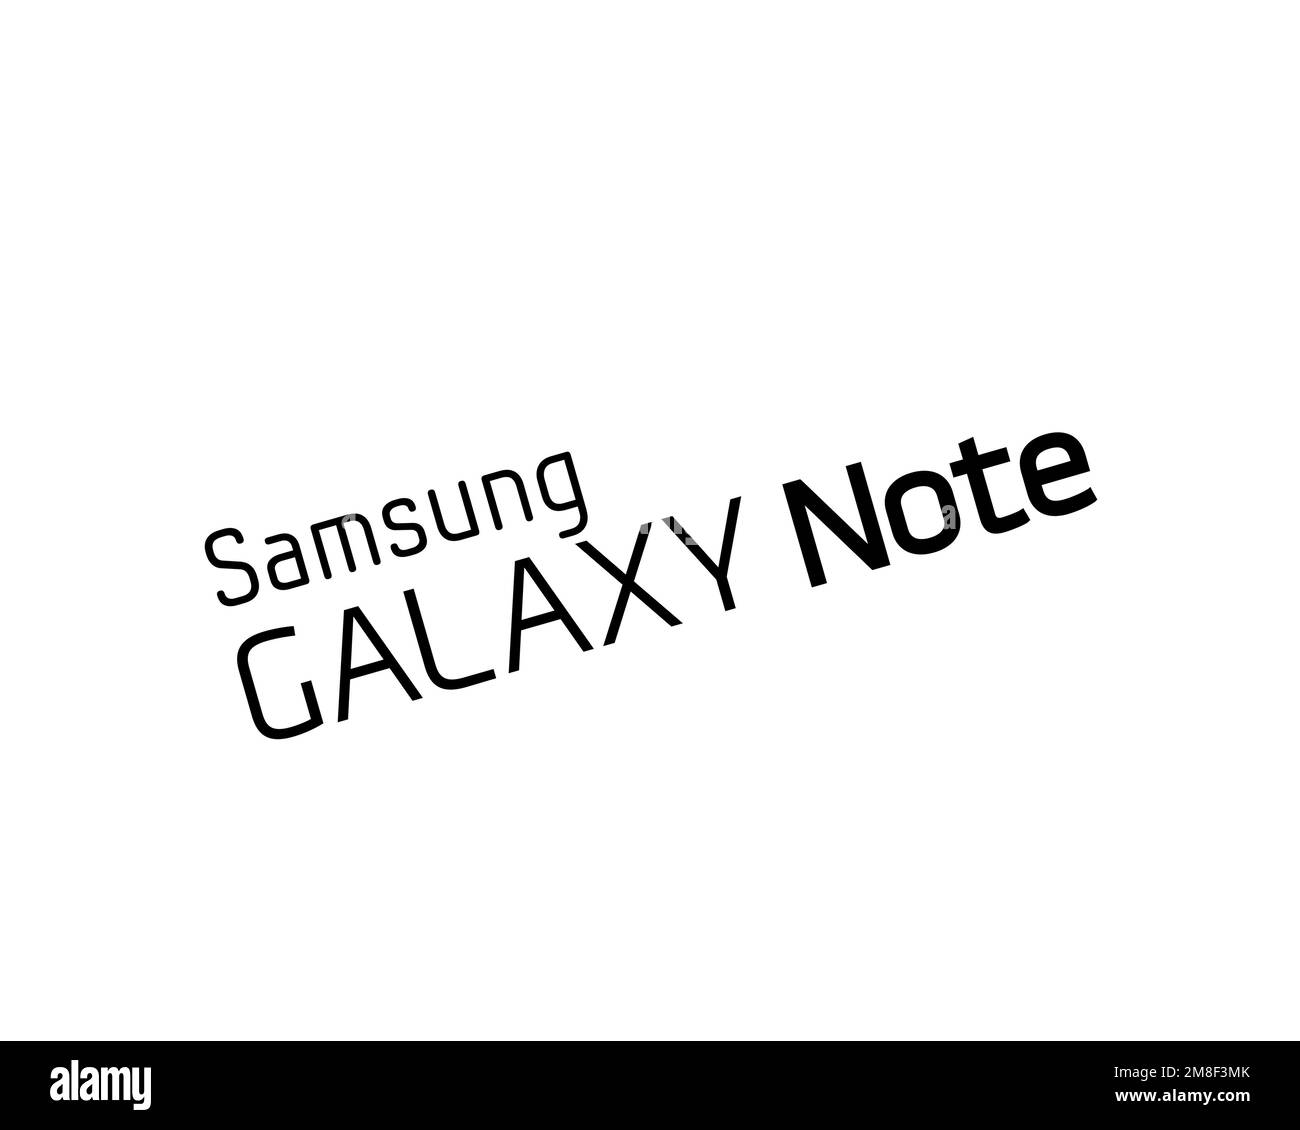 Samsung Galaxy Note original, rotated logo, white background Stock Photo